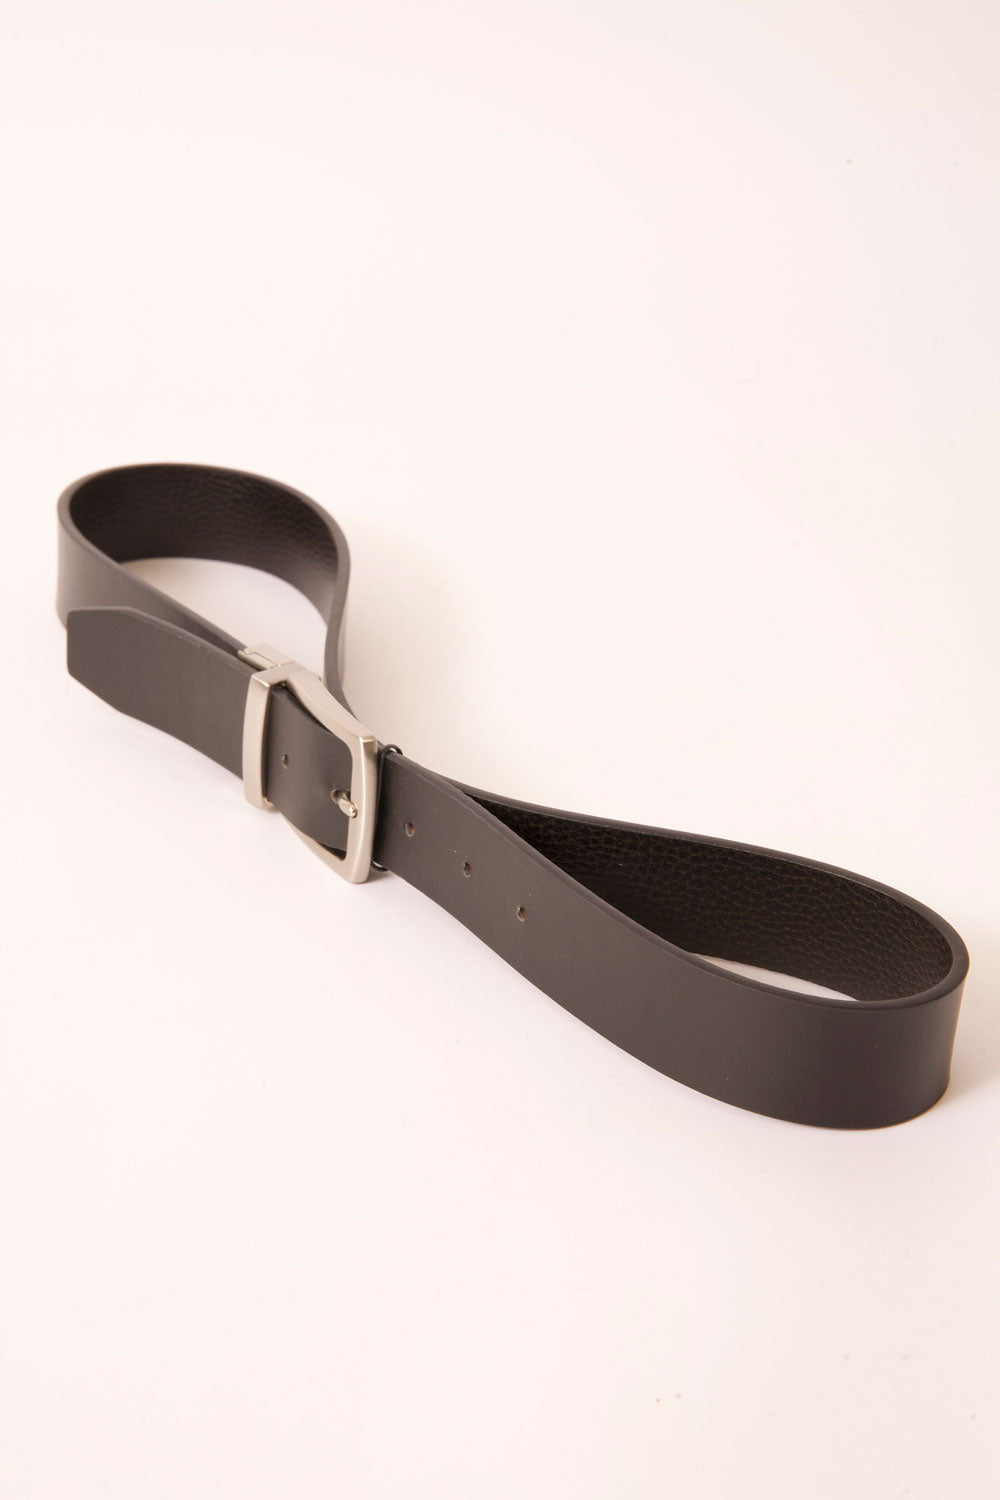 black reversible belt by american hat makers side view